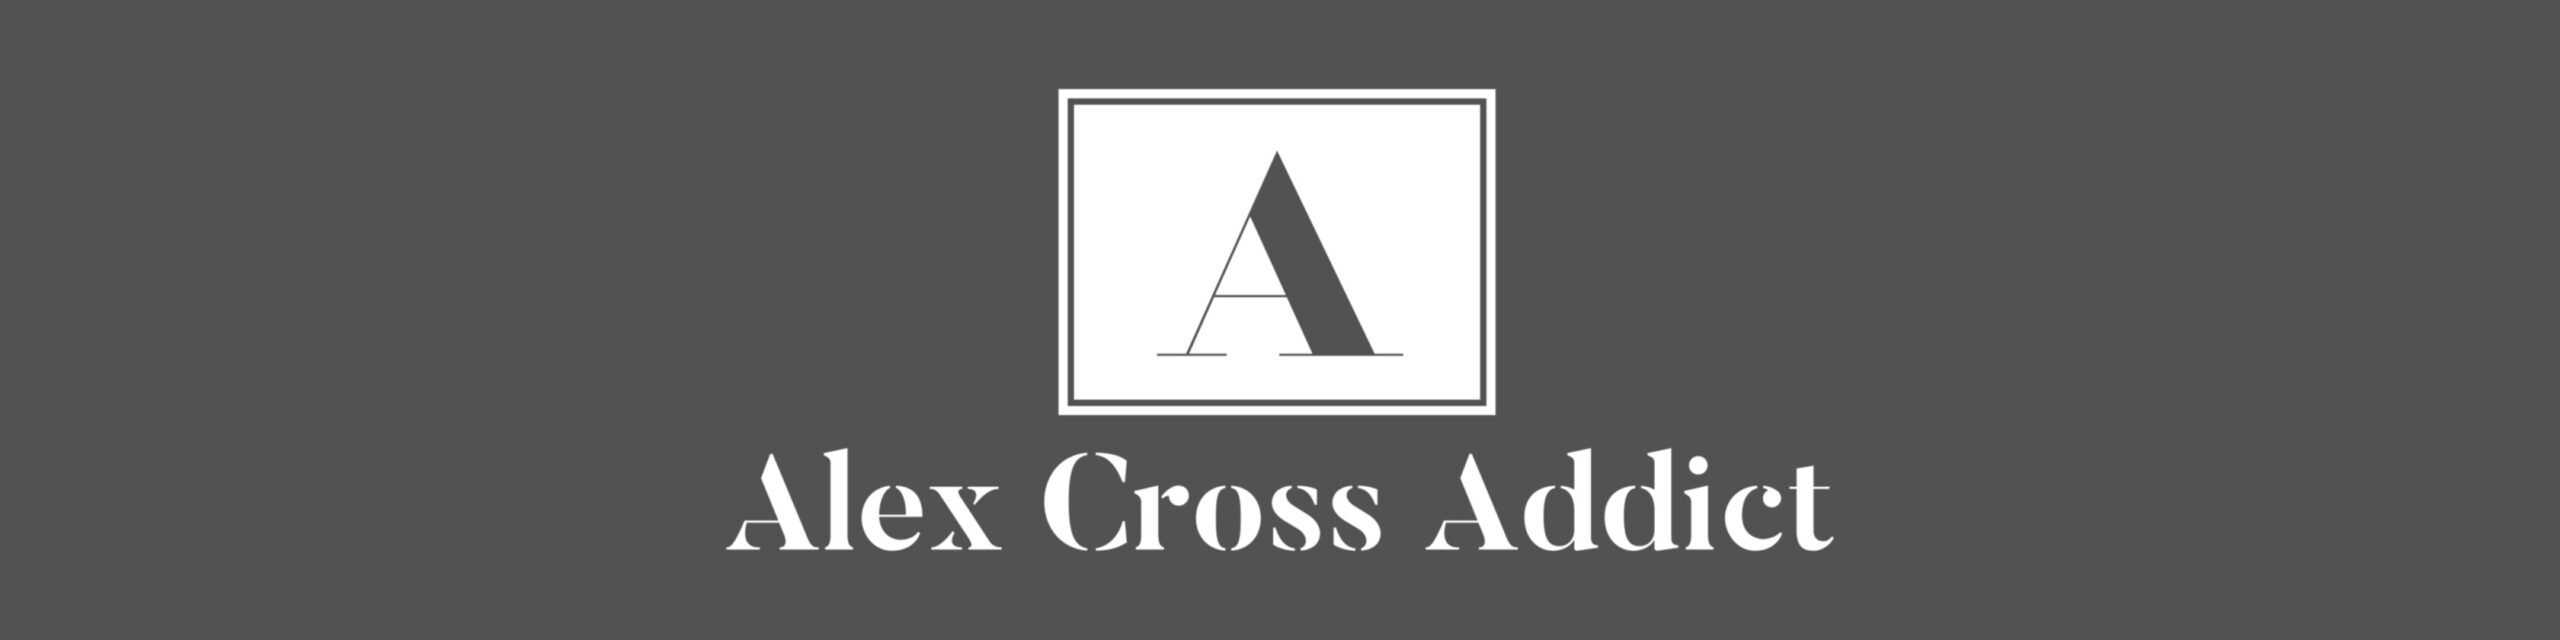 Alex Cross Addict